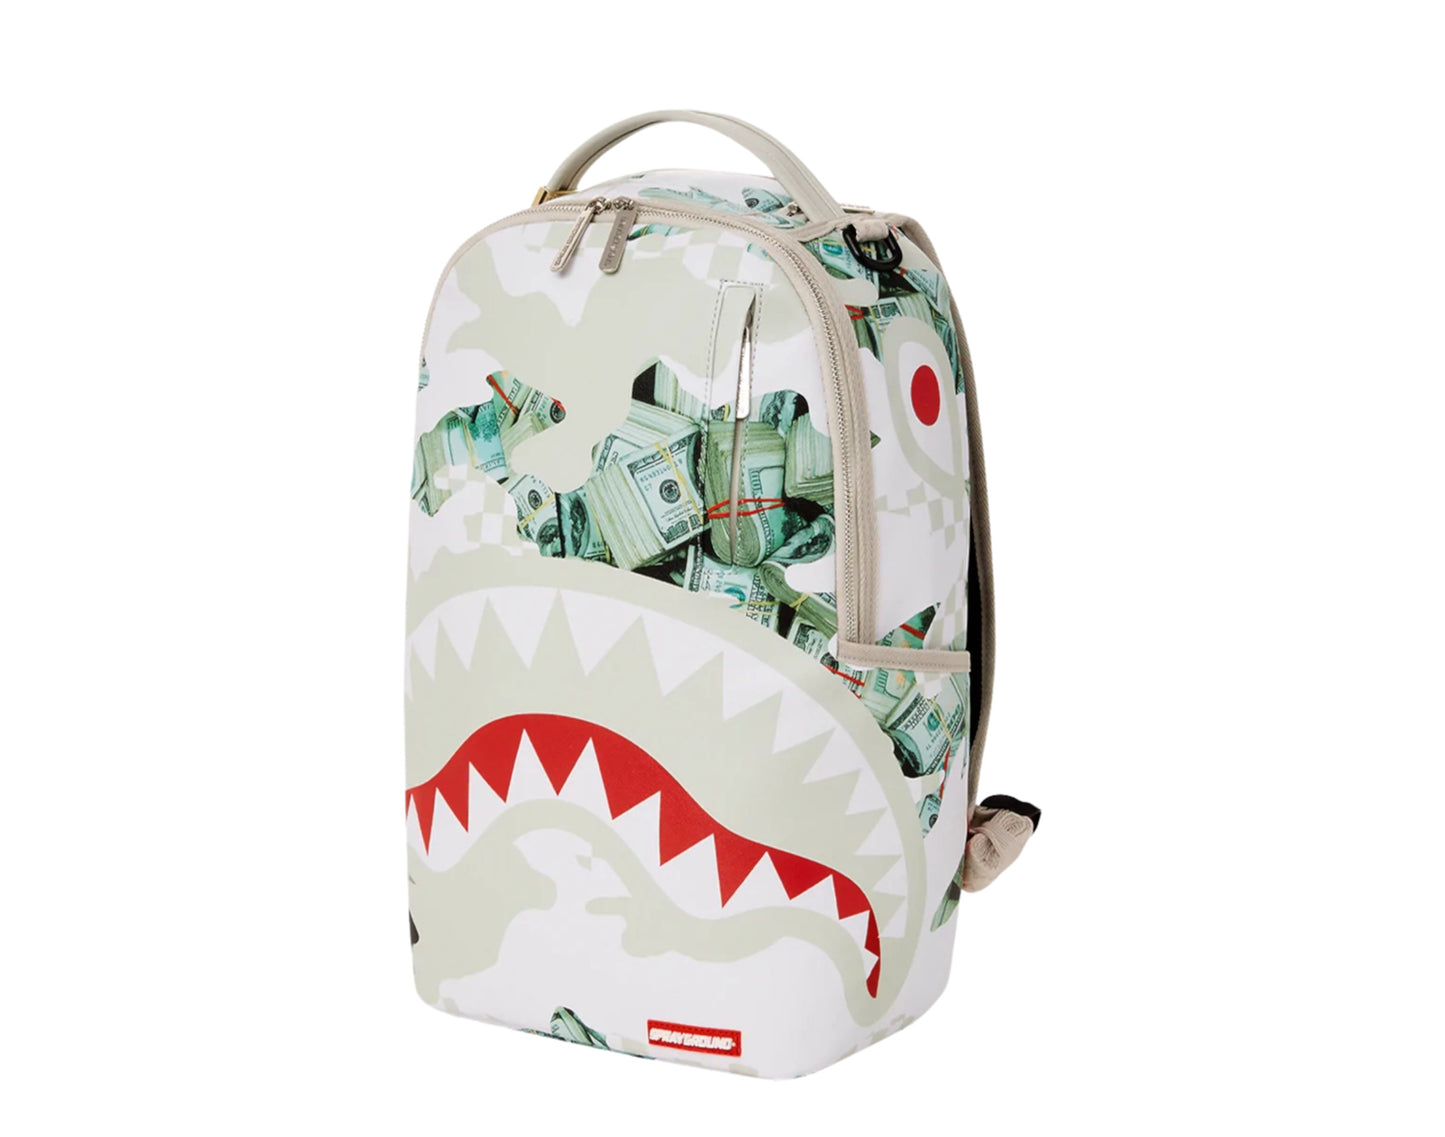 Sprayground Lil Leopard Shark Backpack - Shop eBags.com 